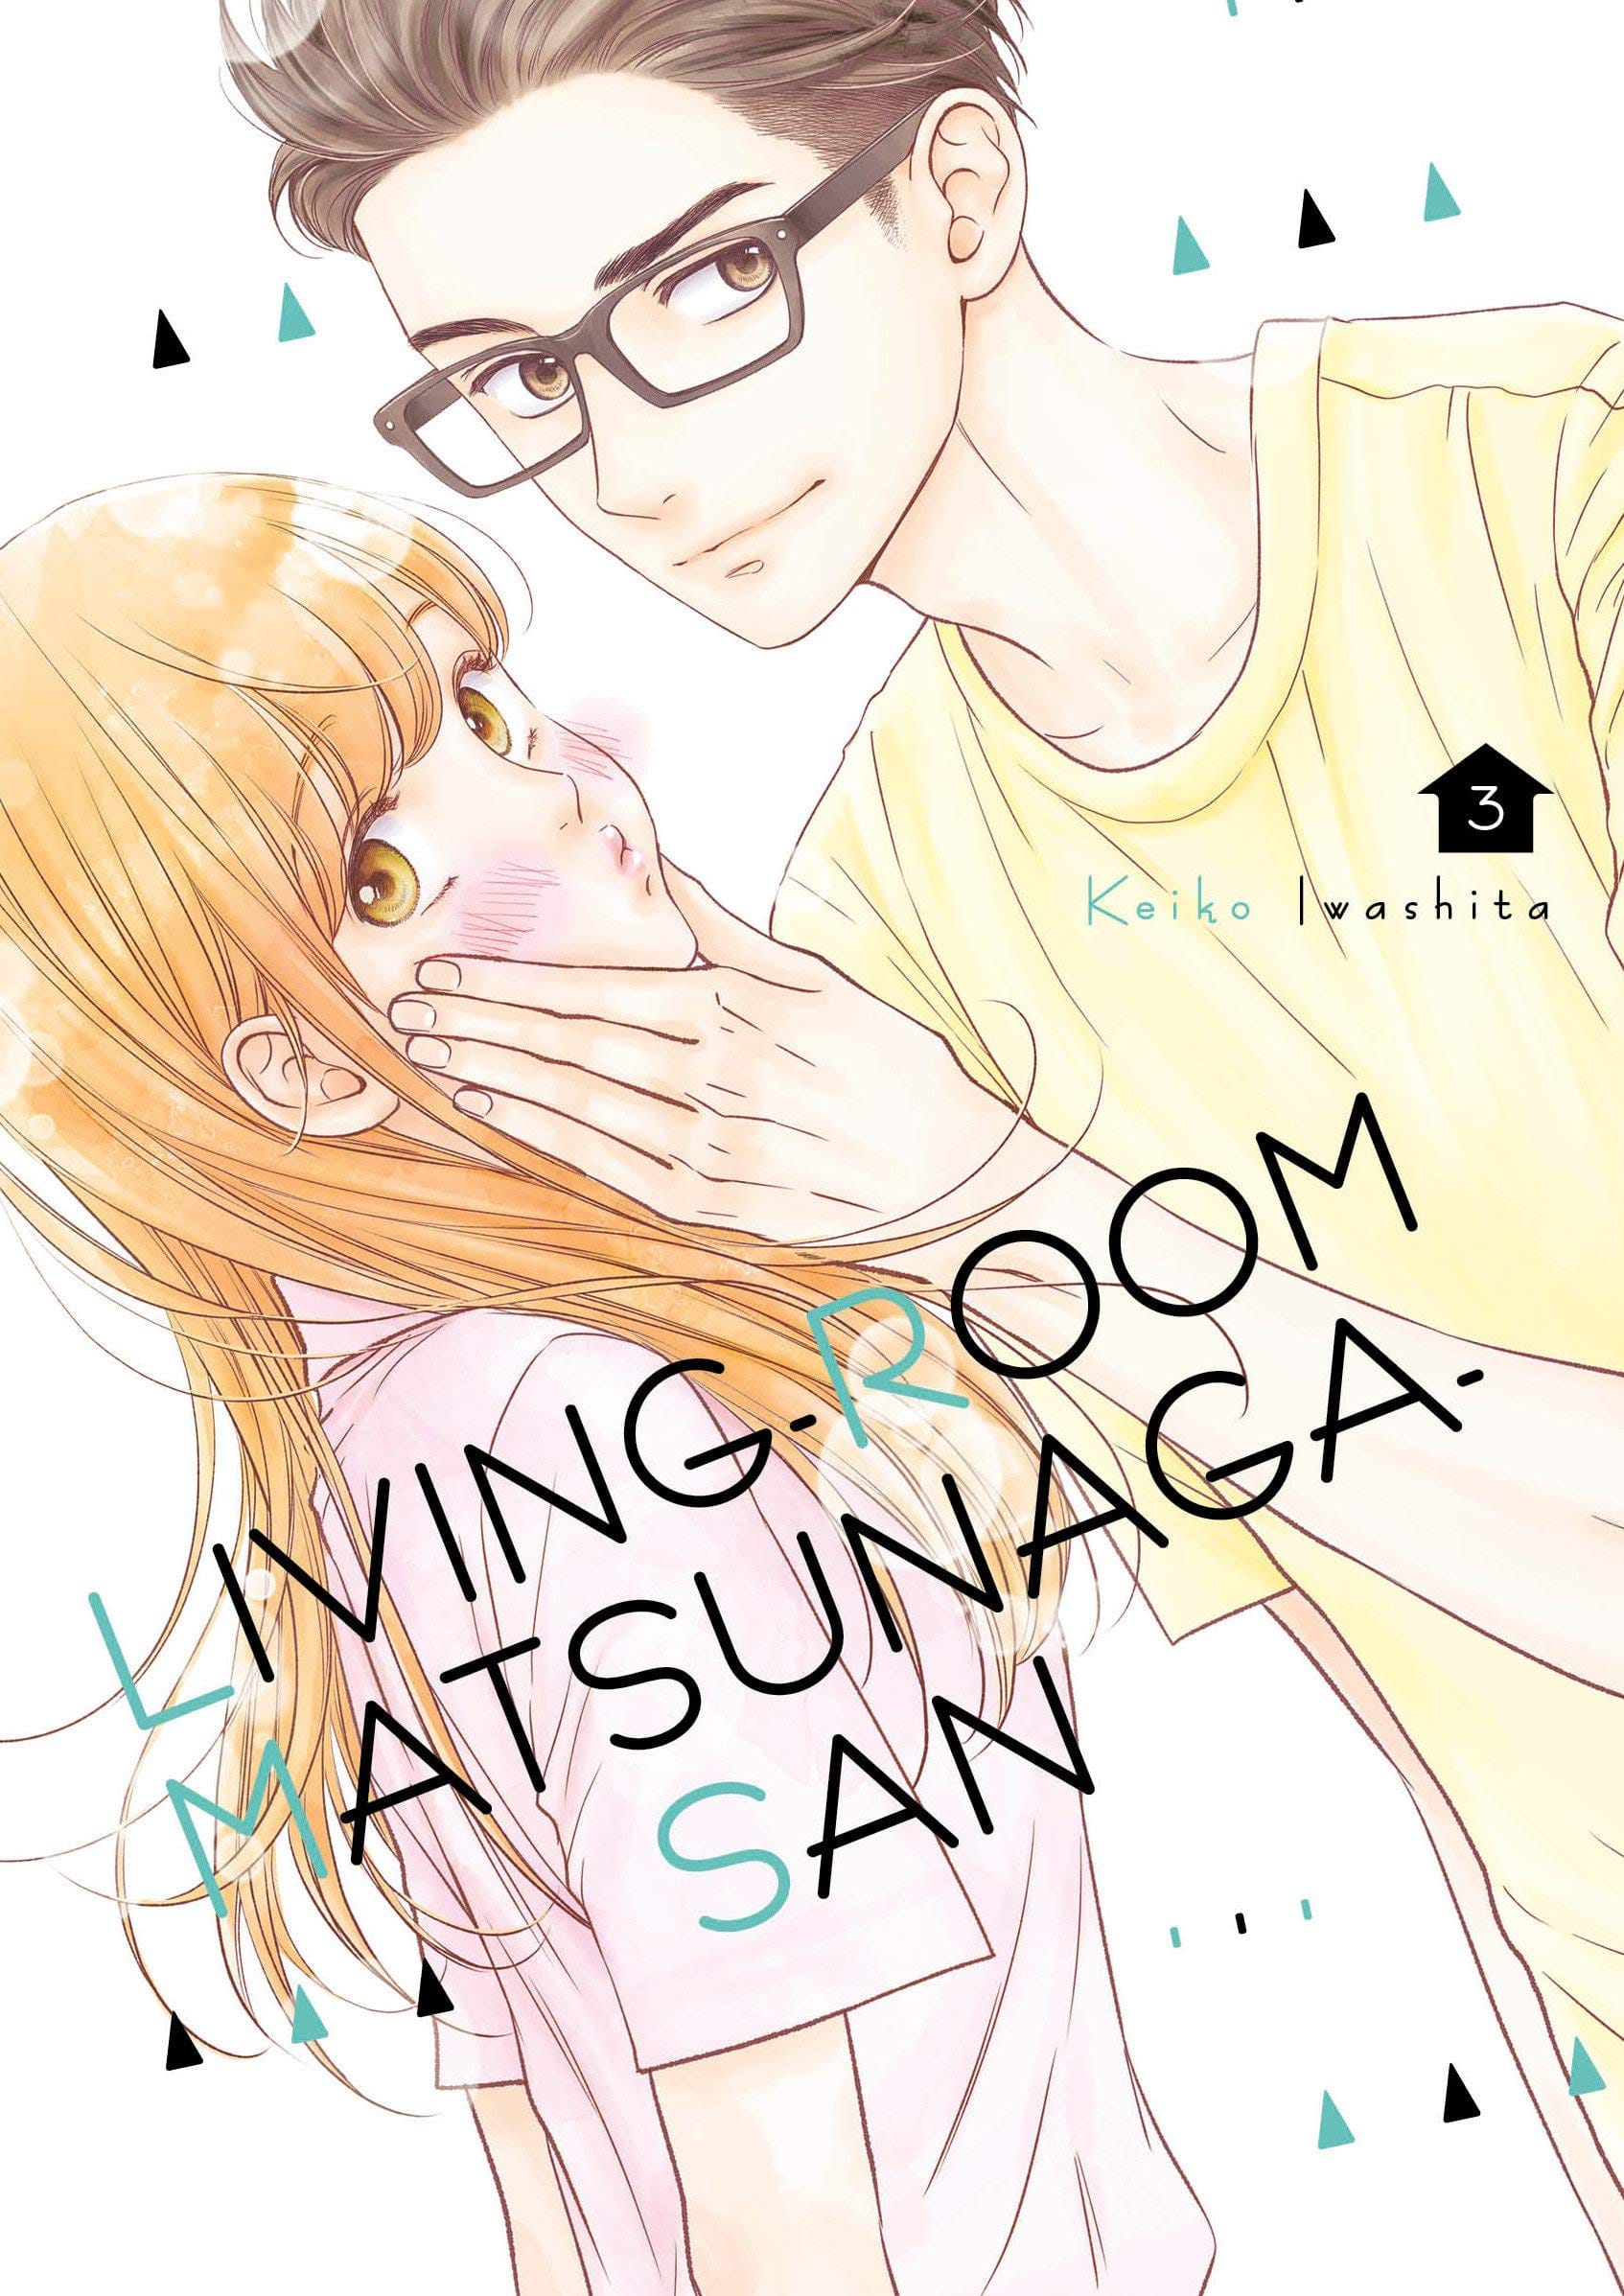 Living-Room Matsunaga-San Vol. 3 - Third Eye